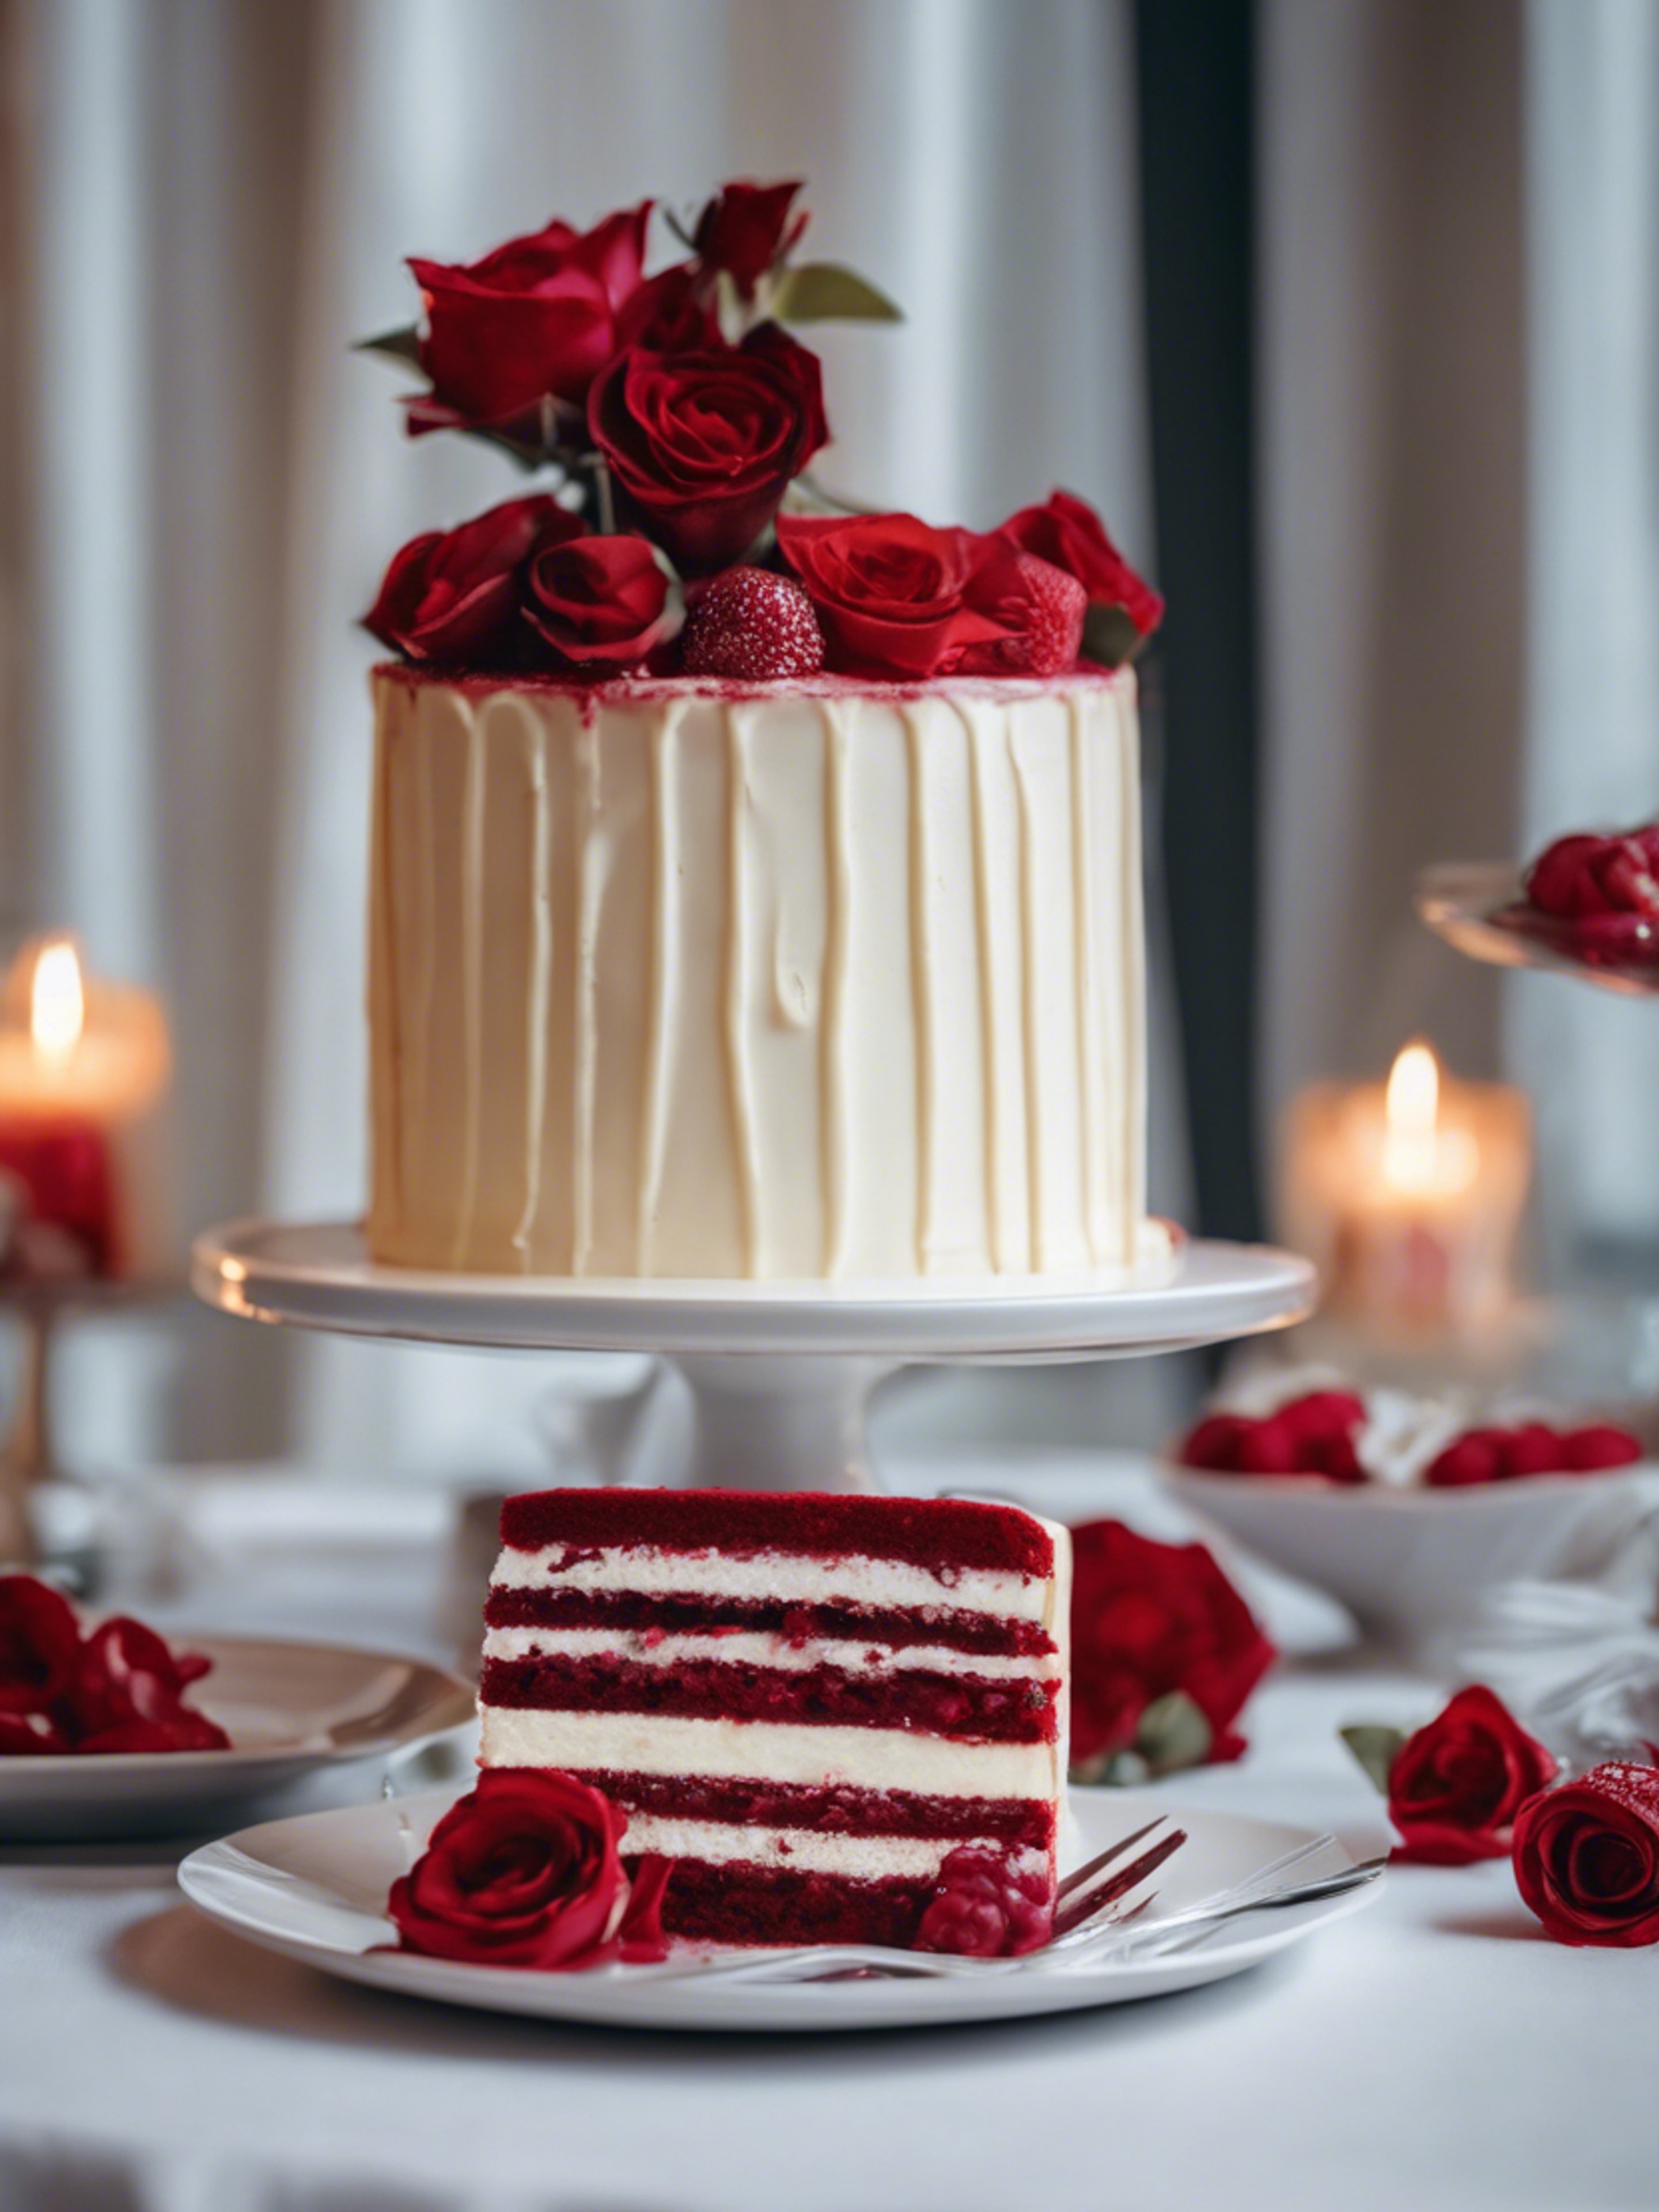 A scrumptious red velvet and white cream layered cake on a dessert table. Hình nền[9c378ca78b014f2daafb]